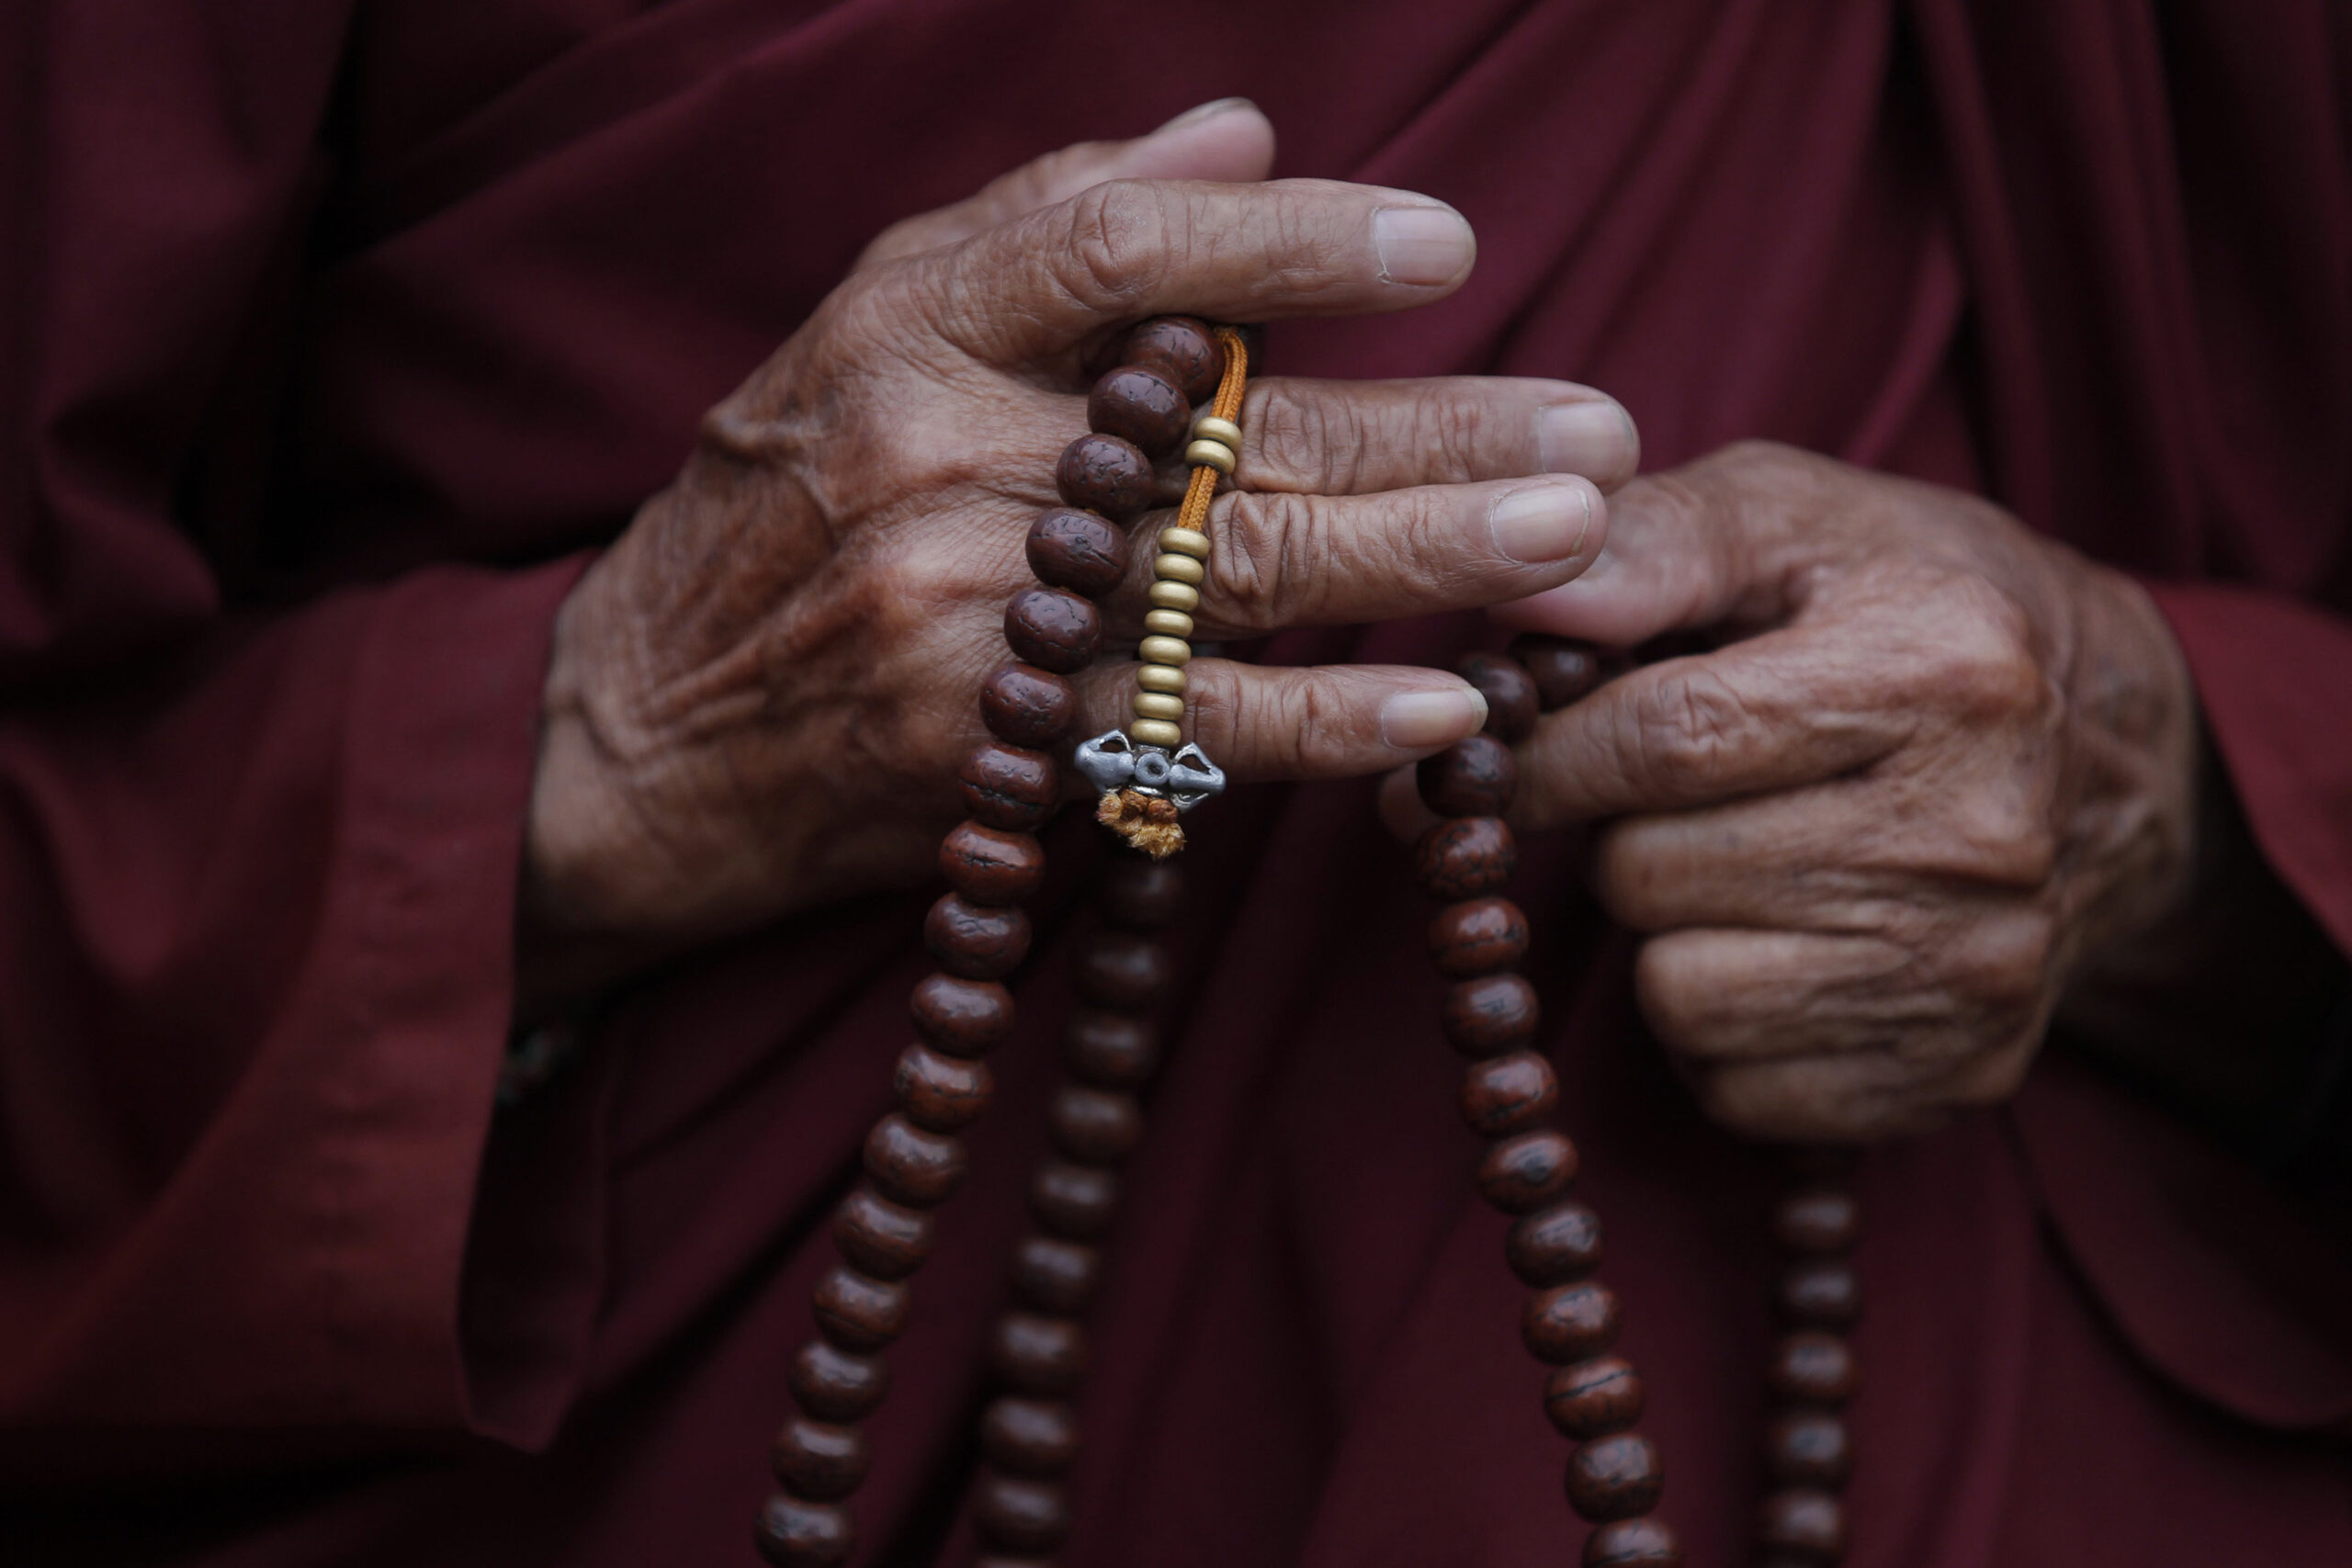 tibetan buddhism lama tibetan teacher mala rosary praying gift dillegence meditation six paramitas